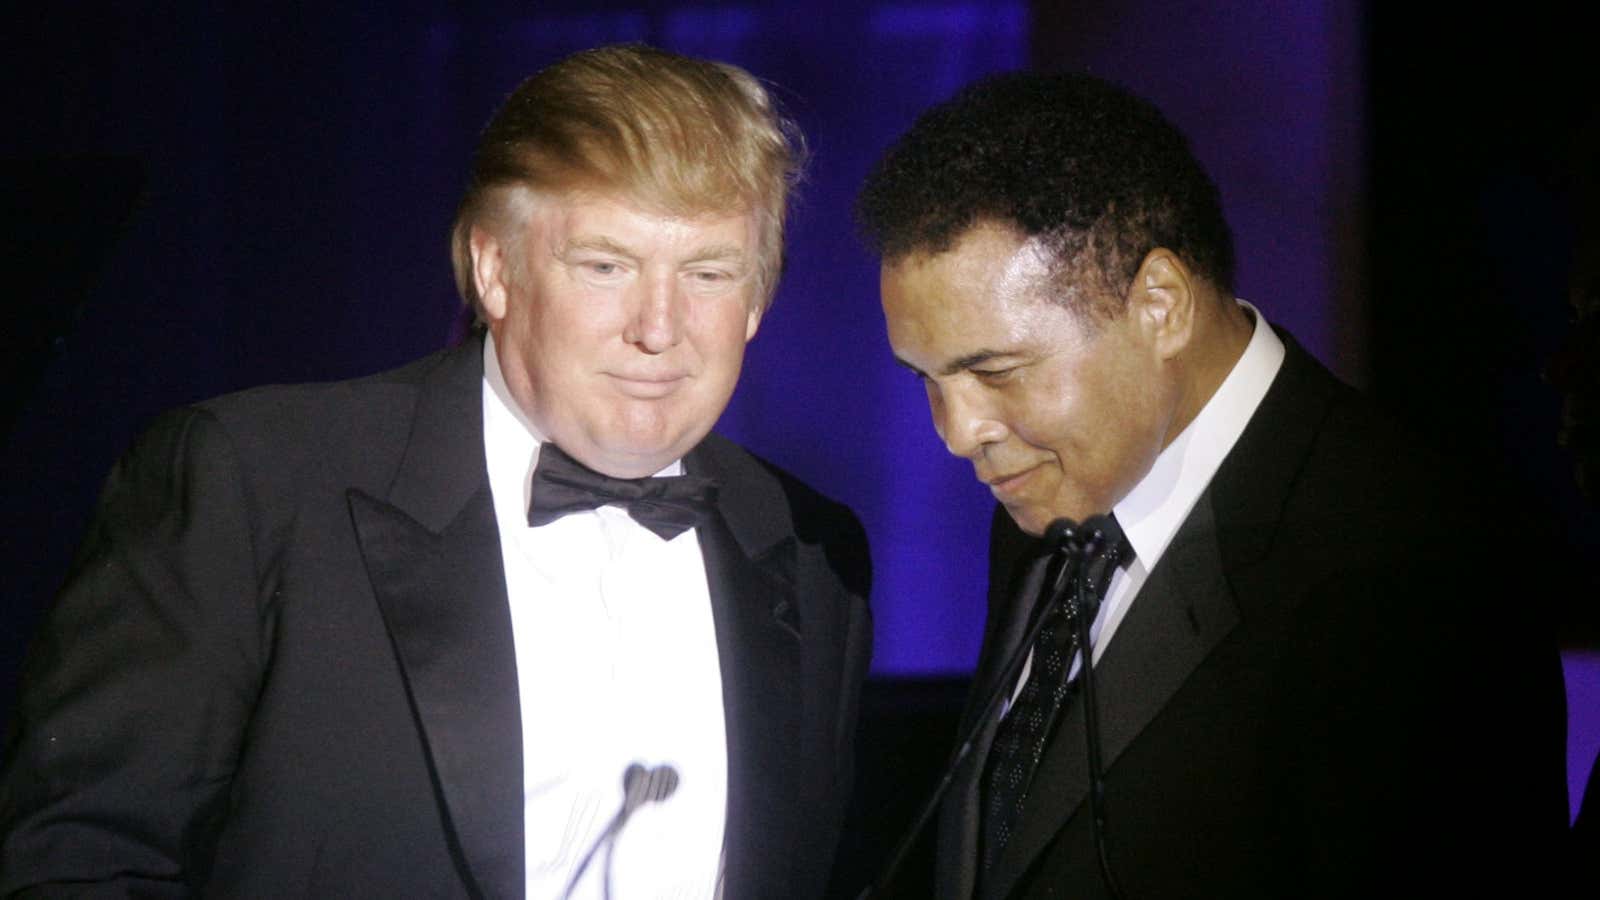 Trump accepts his Muhammad Ali award from Ali at Muhammad Ali’s Celebrity Fight Night XIII,  March 24, 2007.